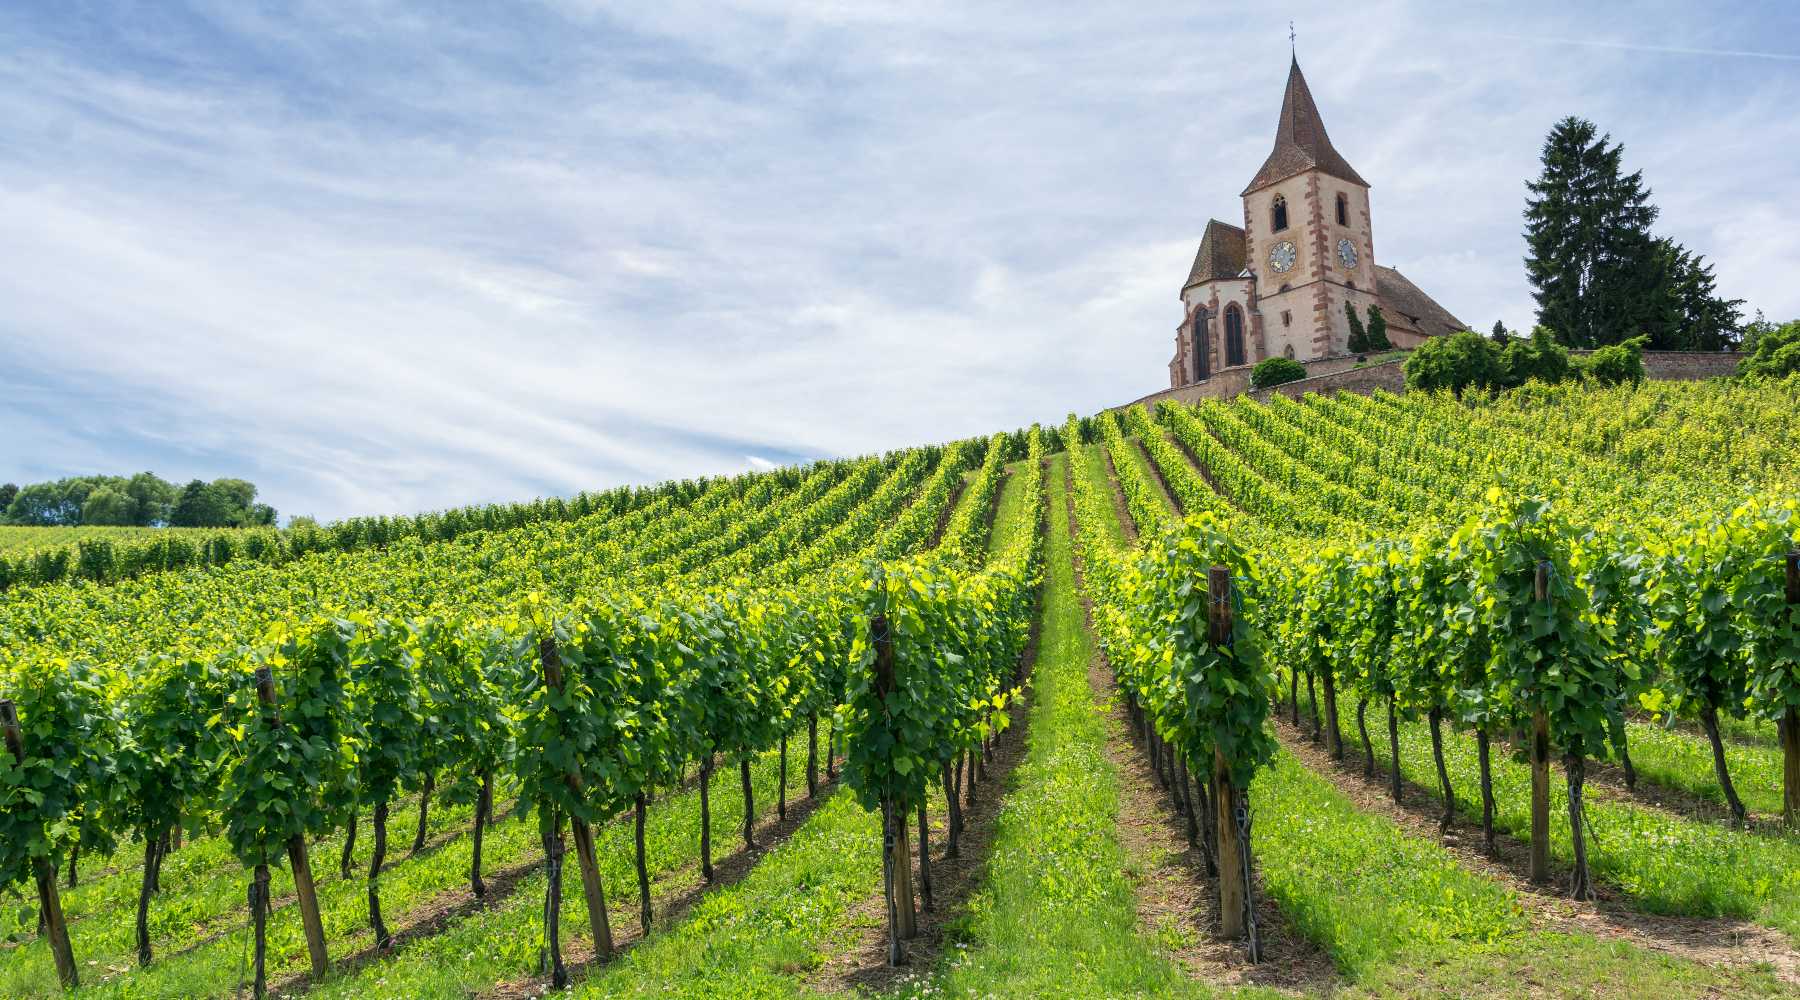 France Alsace region vineyard of Pinot Gris grape